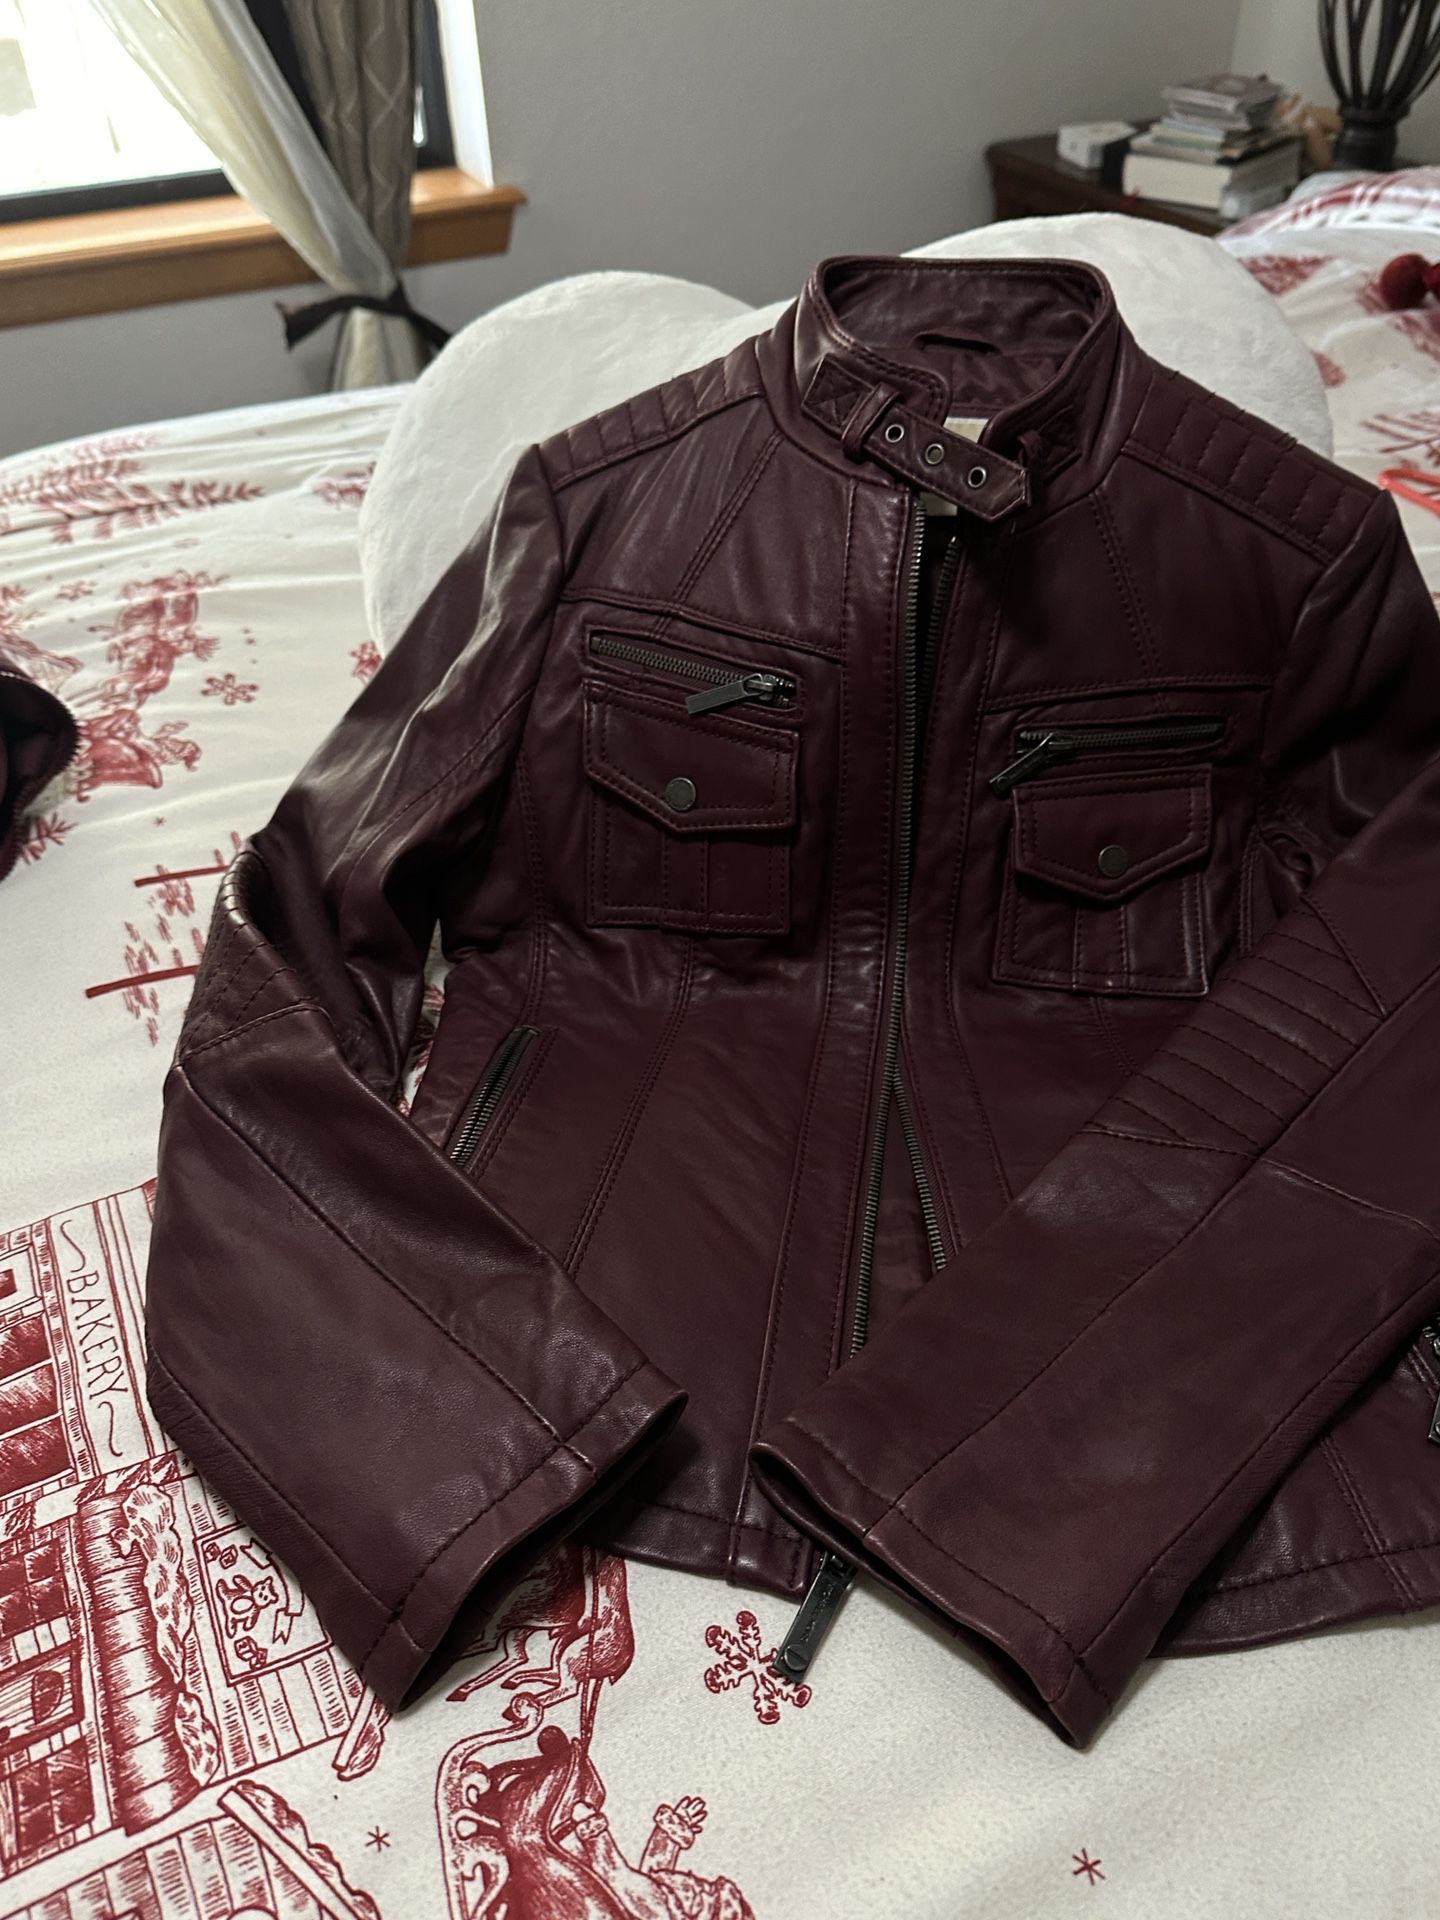 Michael Kors Leather Jacket Burgundy 